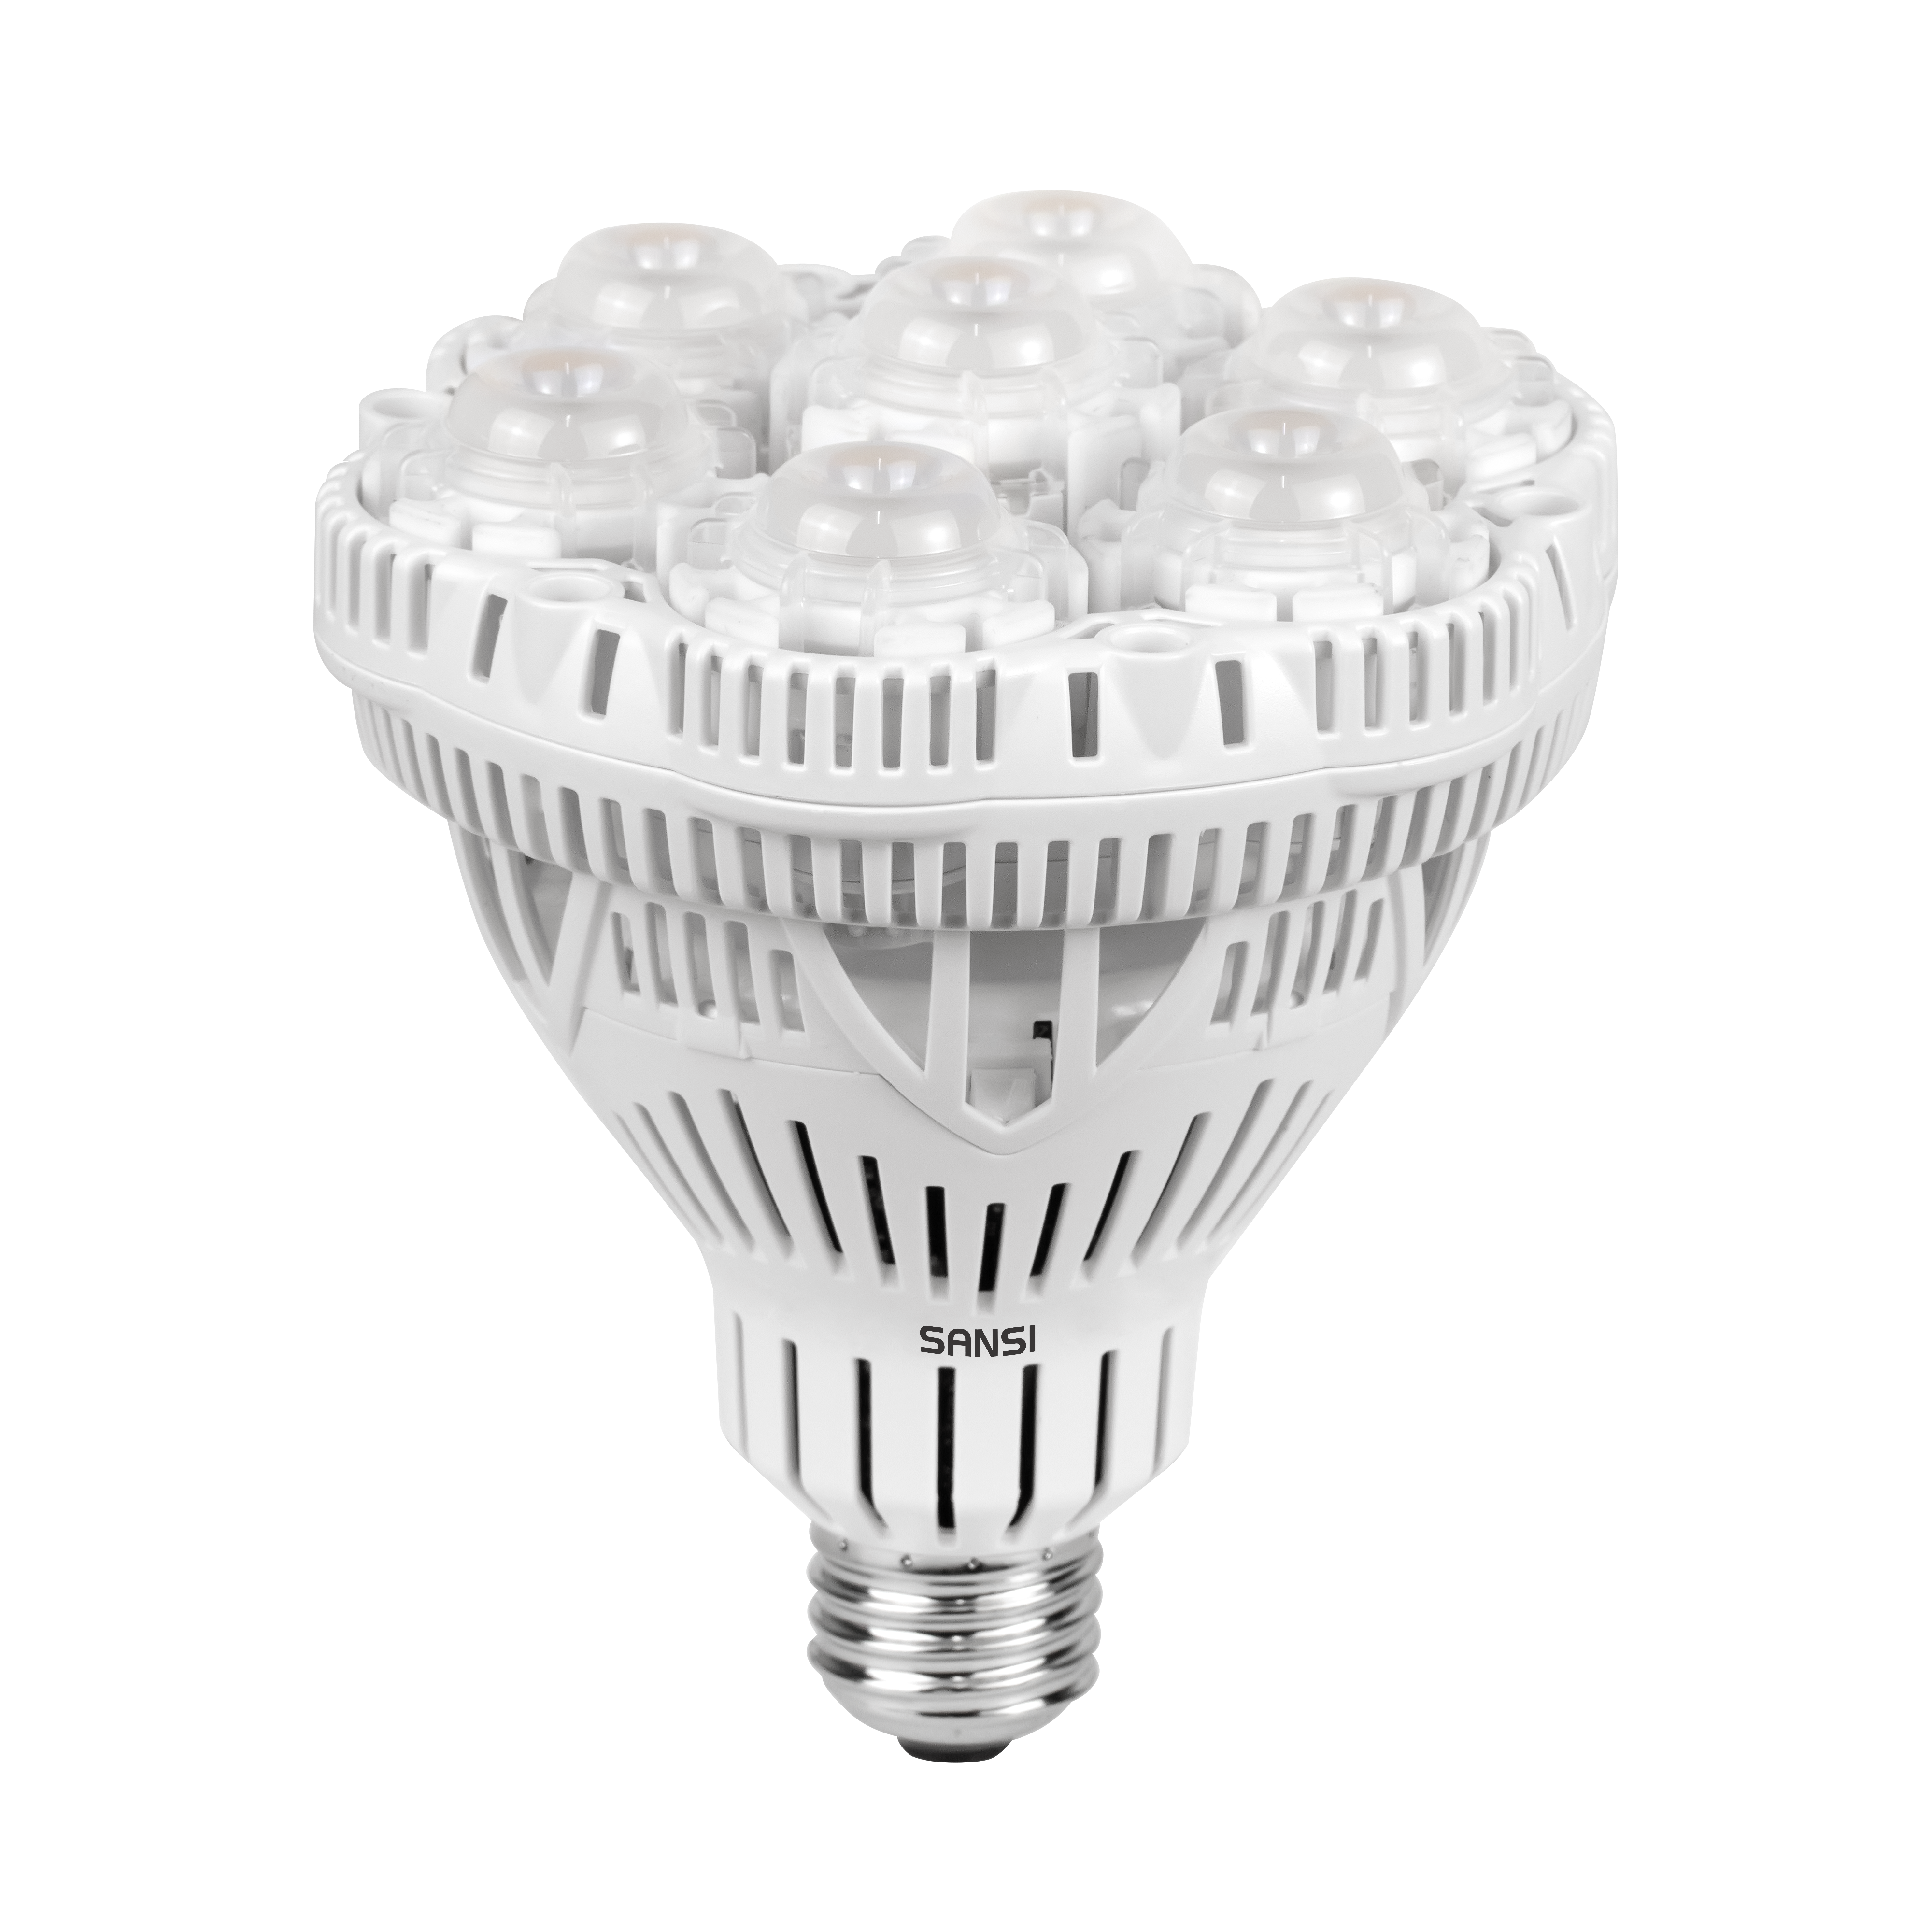 36W led grow light bulb with white light for high light plants indoor